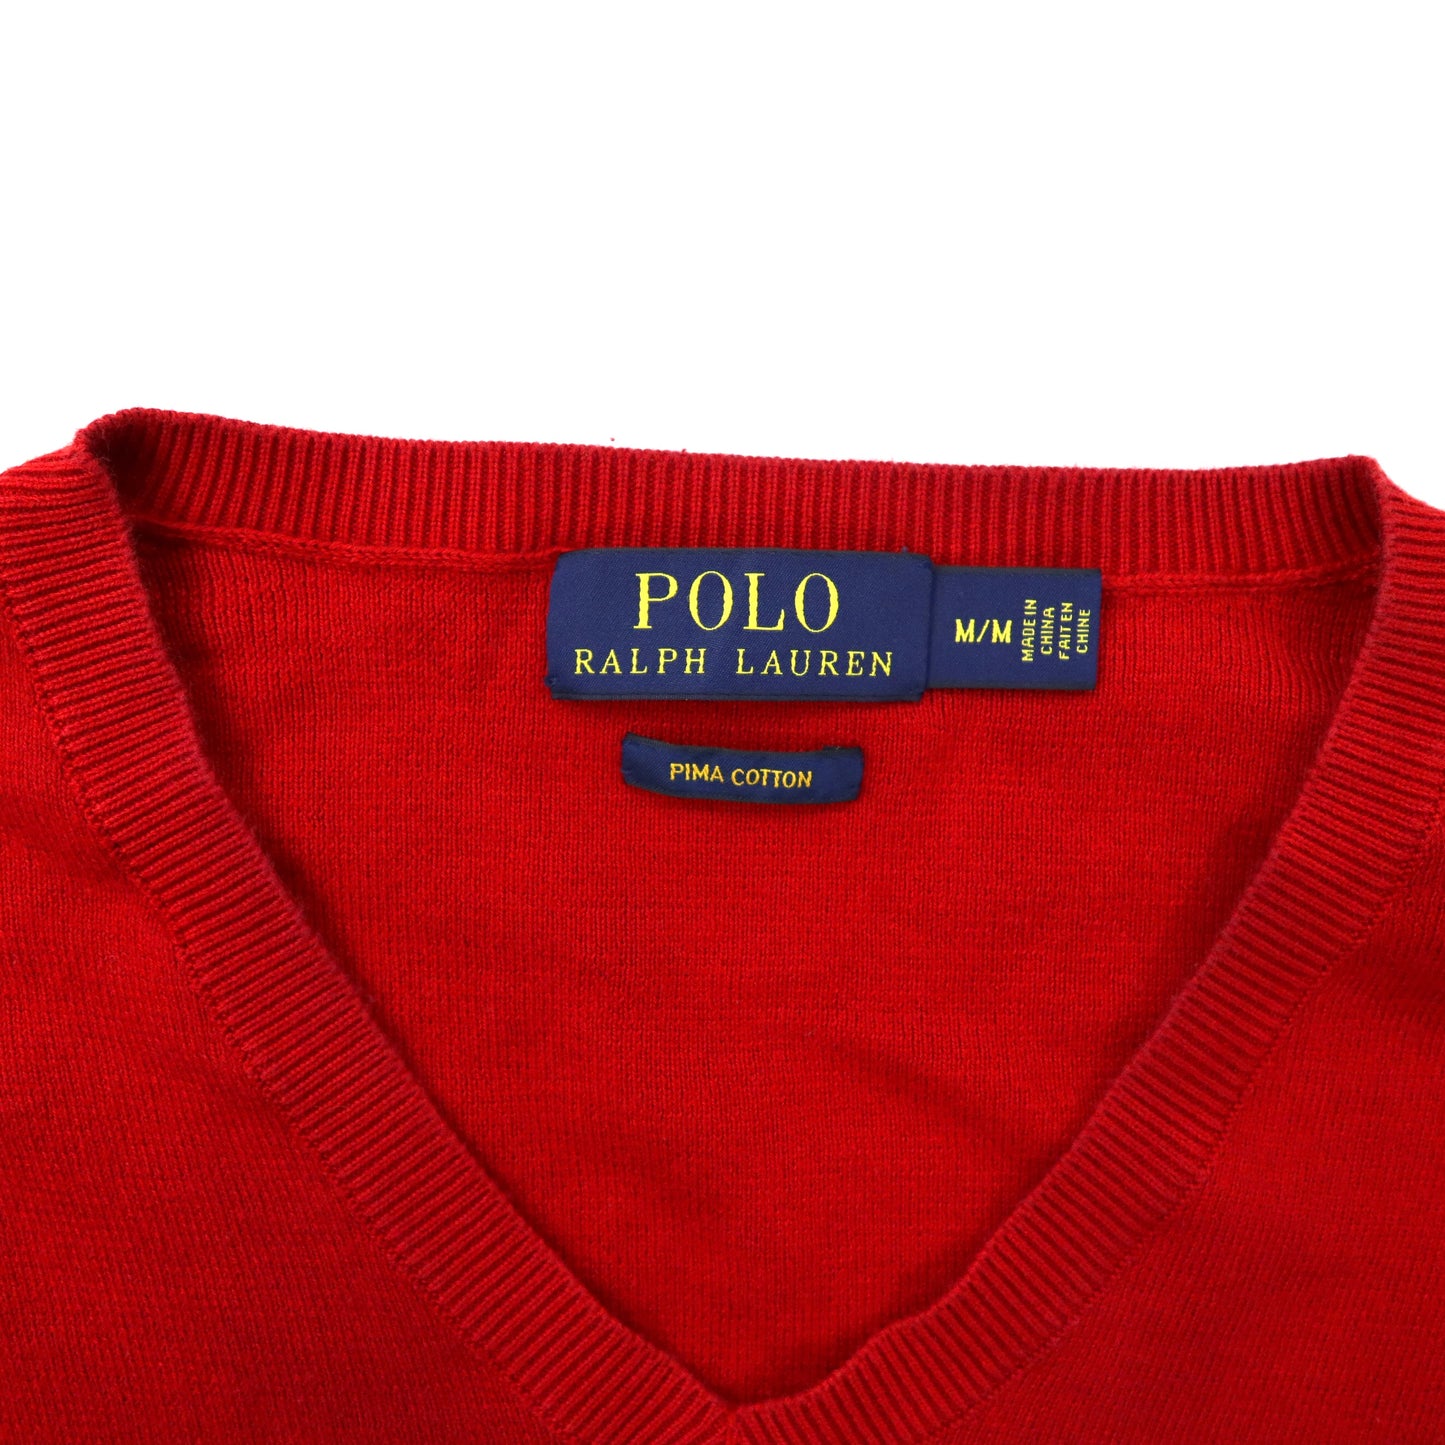 POLO RALPH LAUREN Vネックニット セーター M レッド プリマコットン スモールポニー刺繍